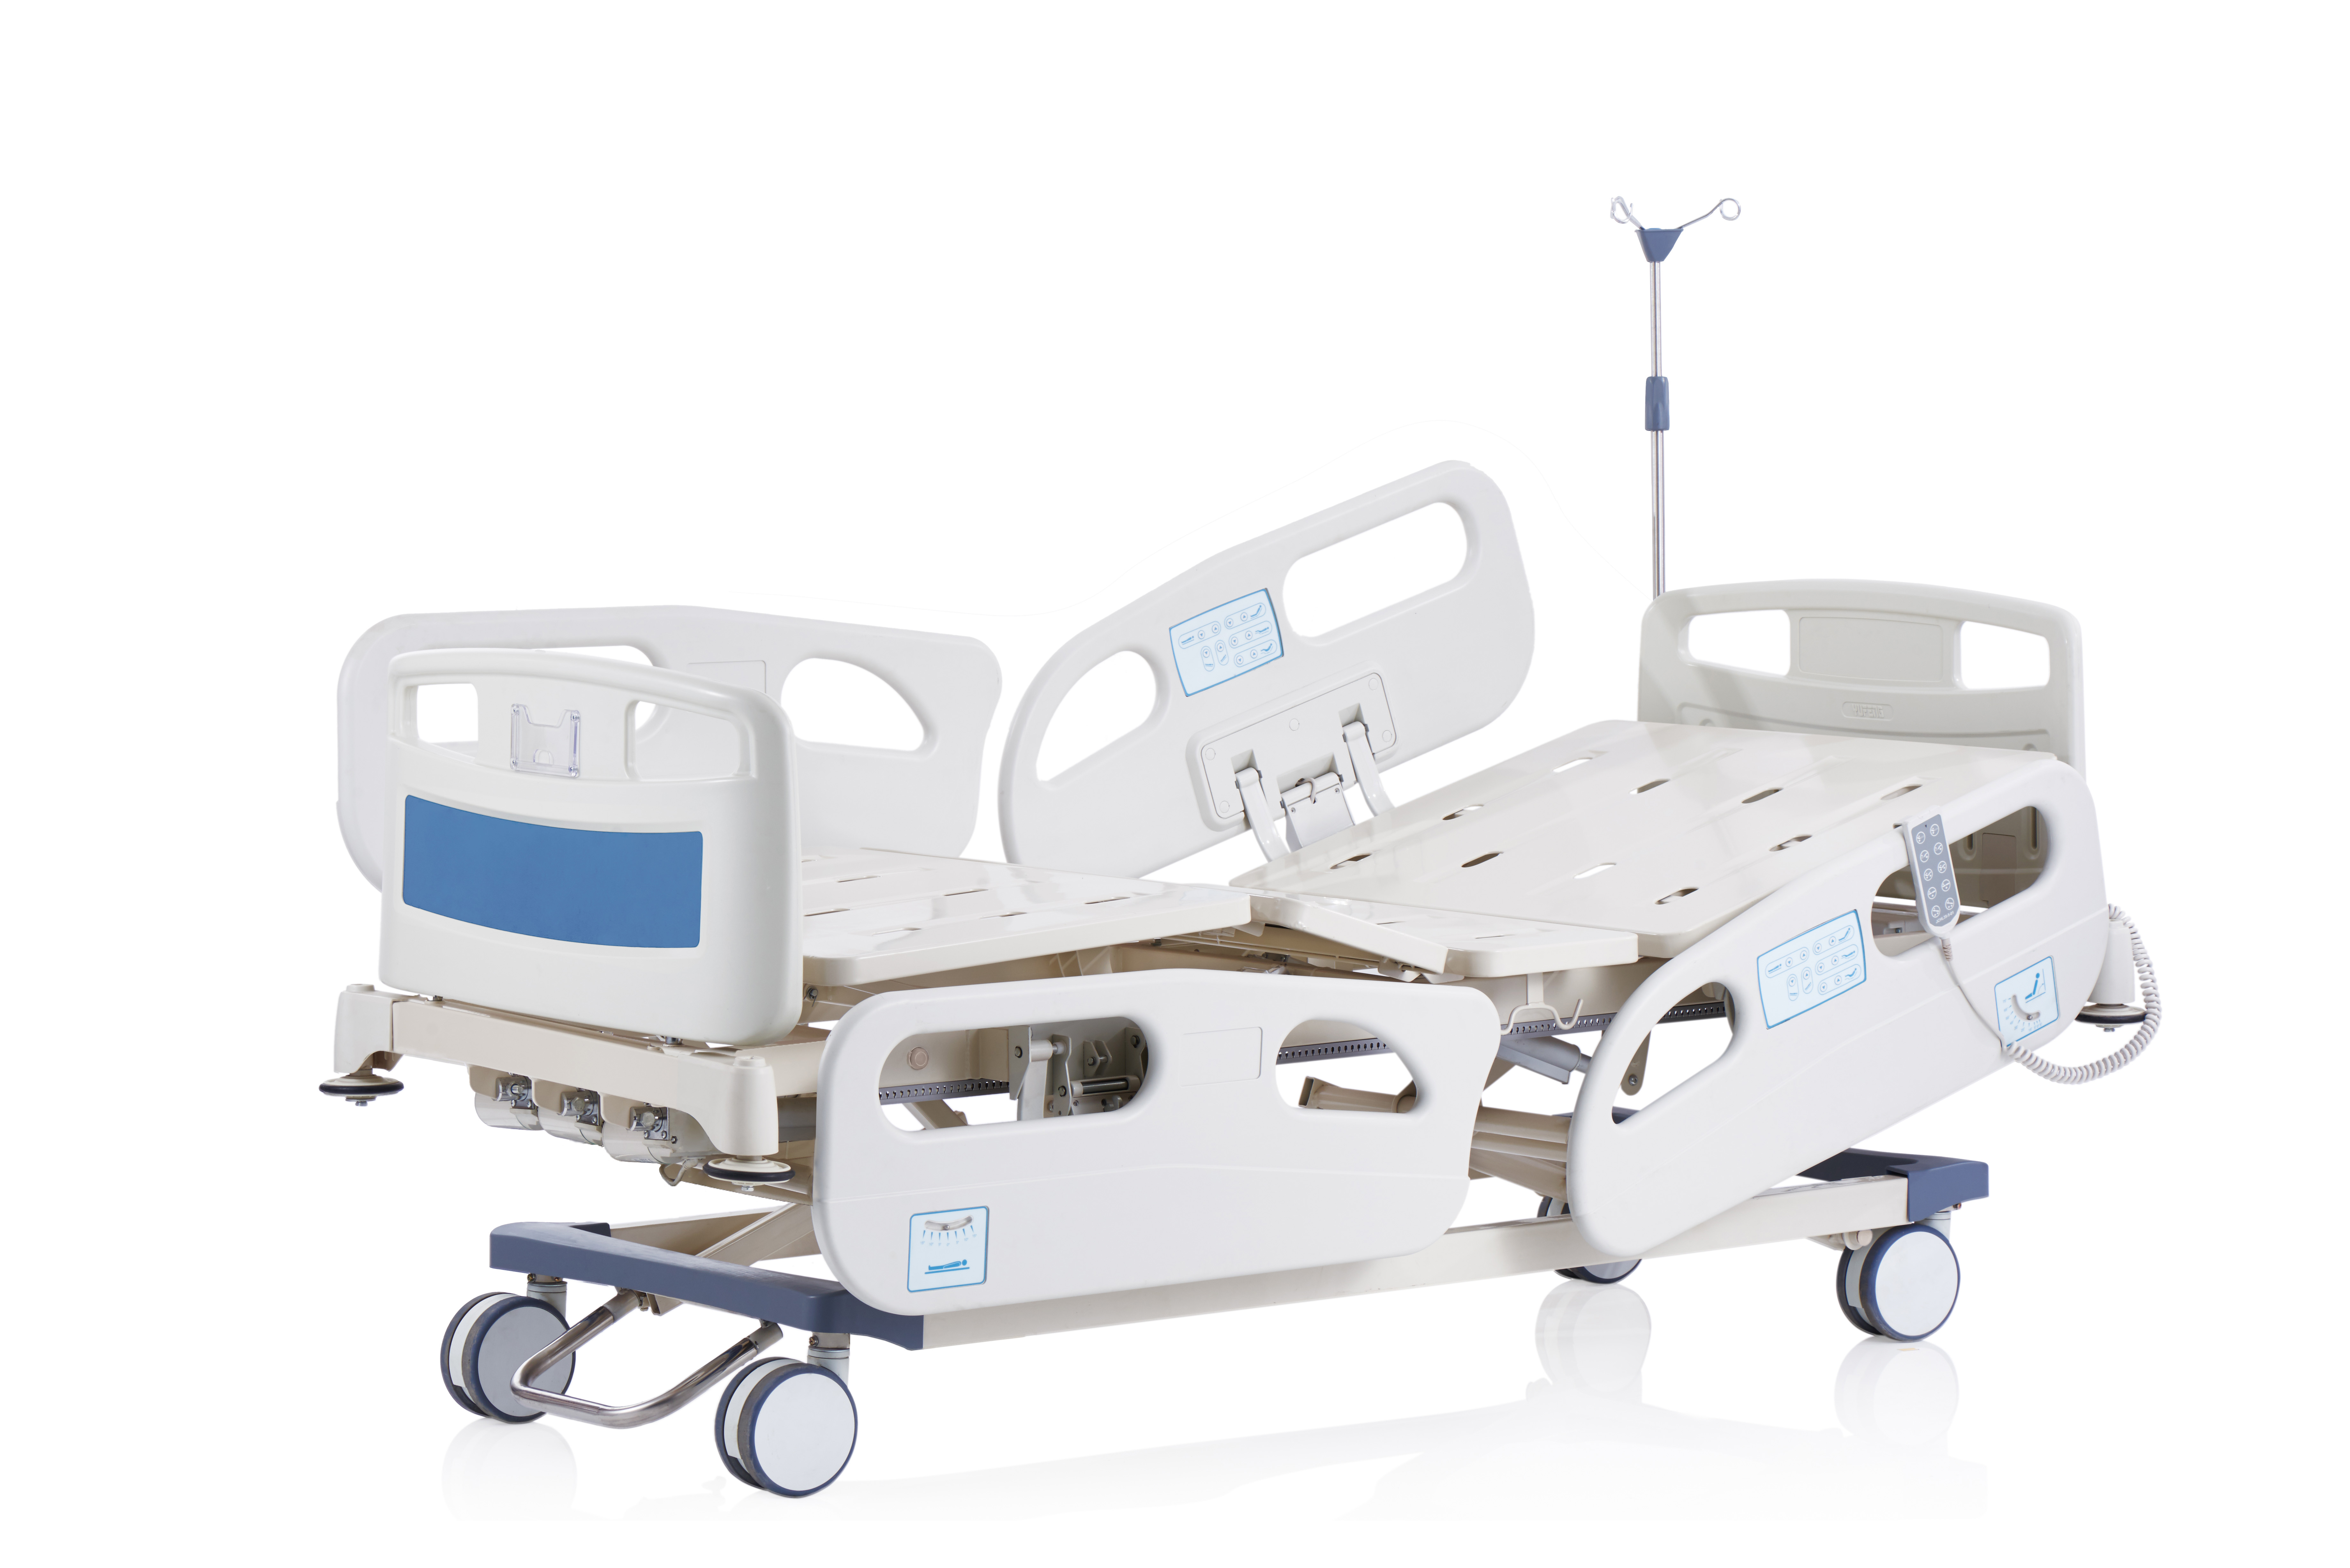 China Manufacturer for Medical Surgical Bed - E5704 folding medical electric hospital ICU bed Patient nursing bed – Chinabase